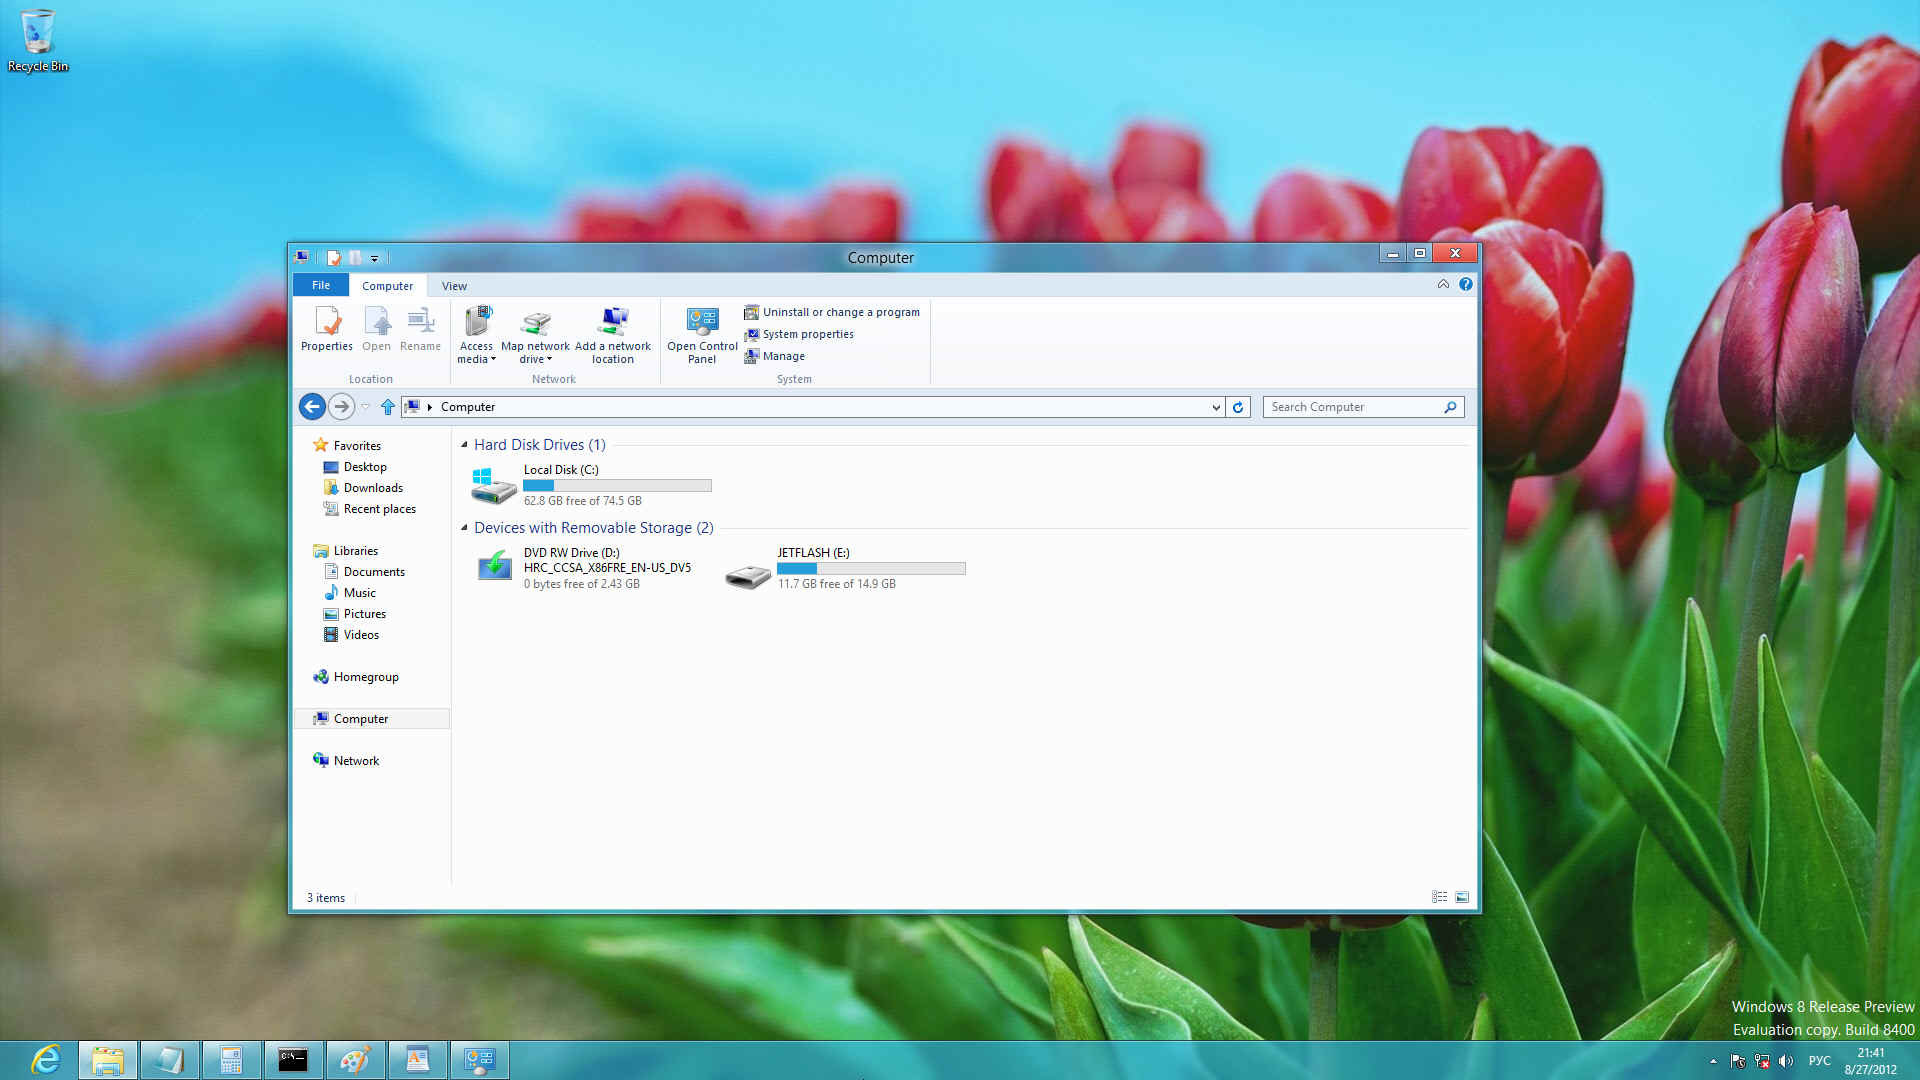 M8 release v 2.0. Windows 8 build 8400. Windows 8 release Preview. Windows 8 build 8400 download. Desktop info.